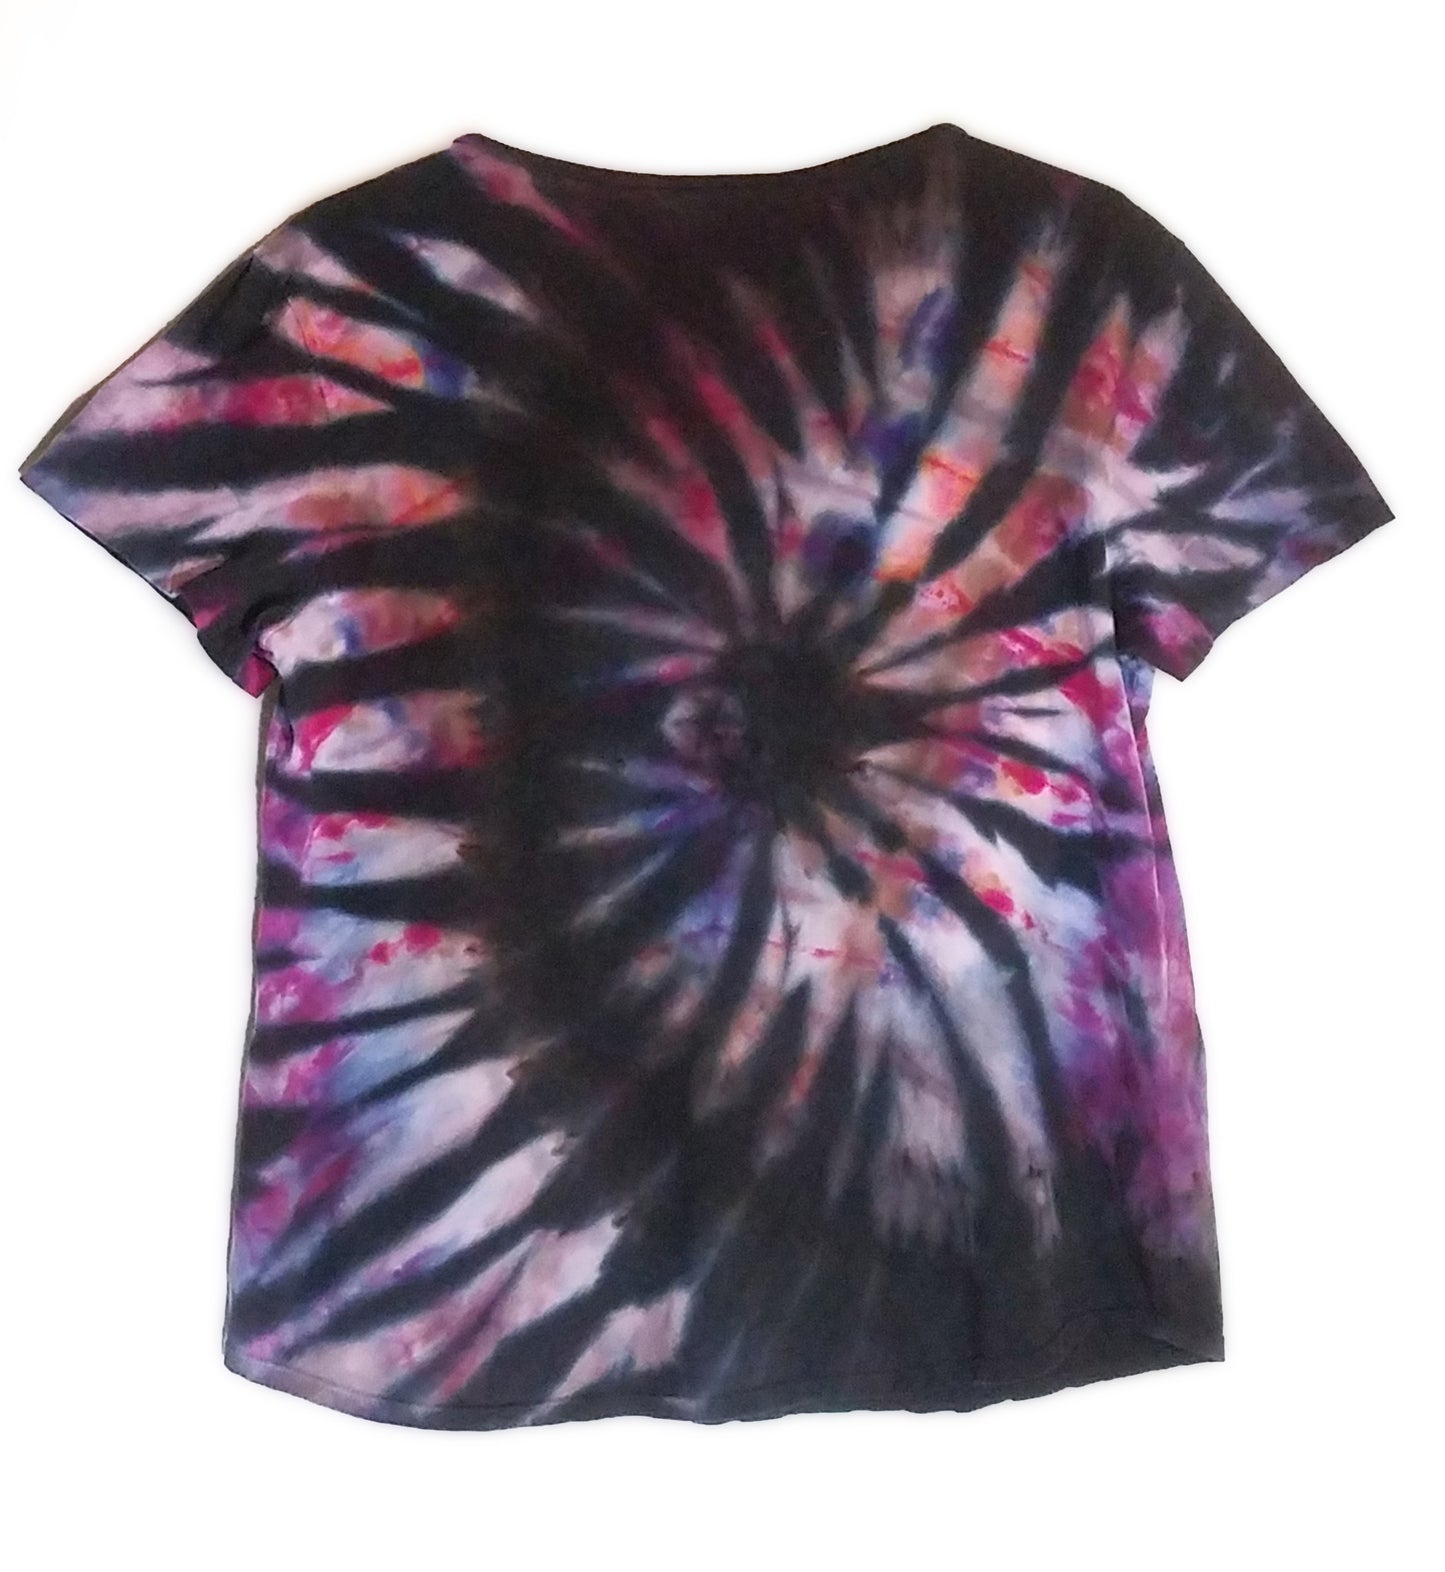 Black Swirl Scoop Neck Tye-Dyed Shirt XL